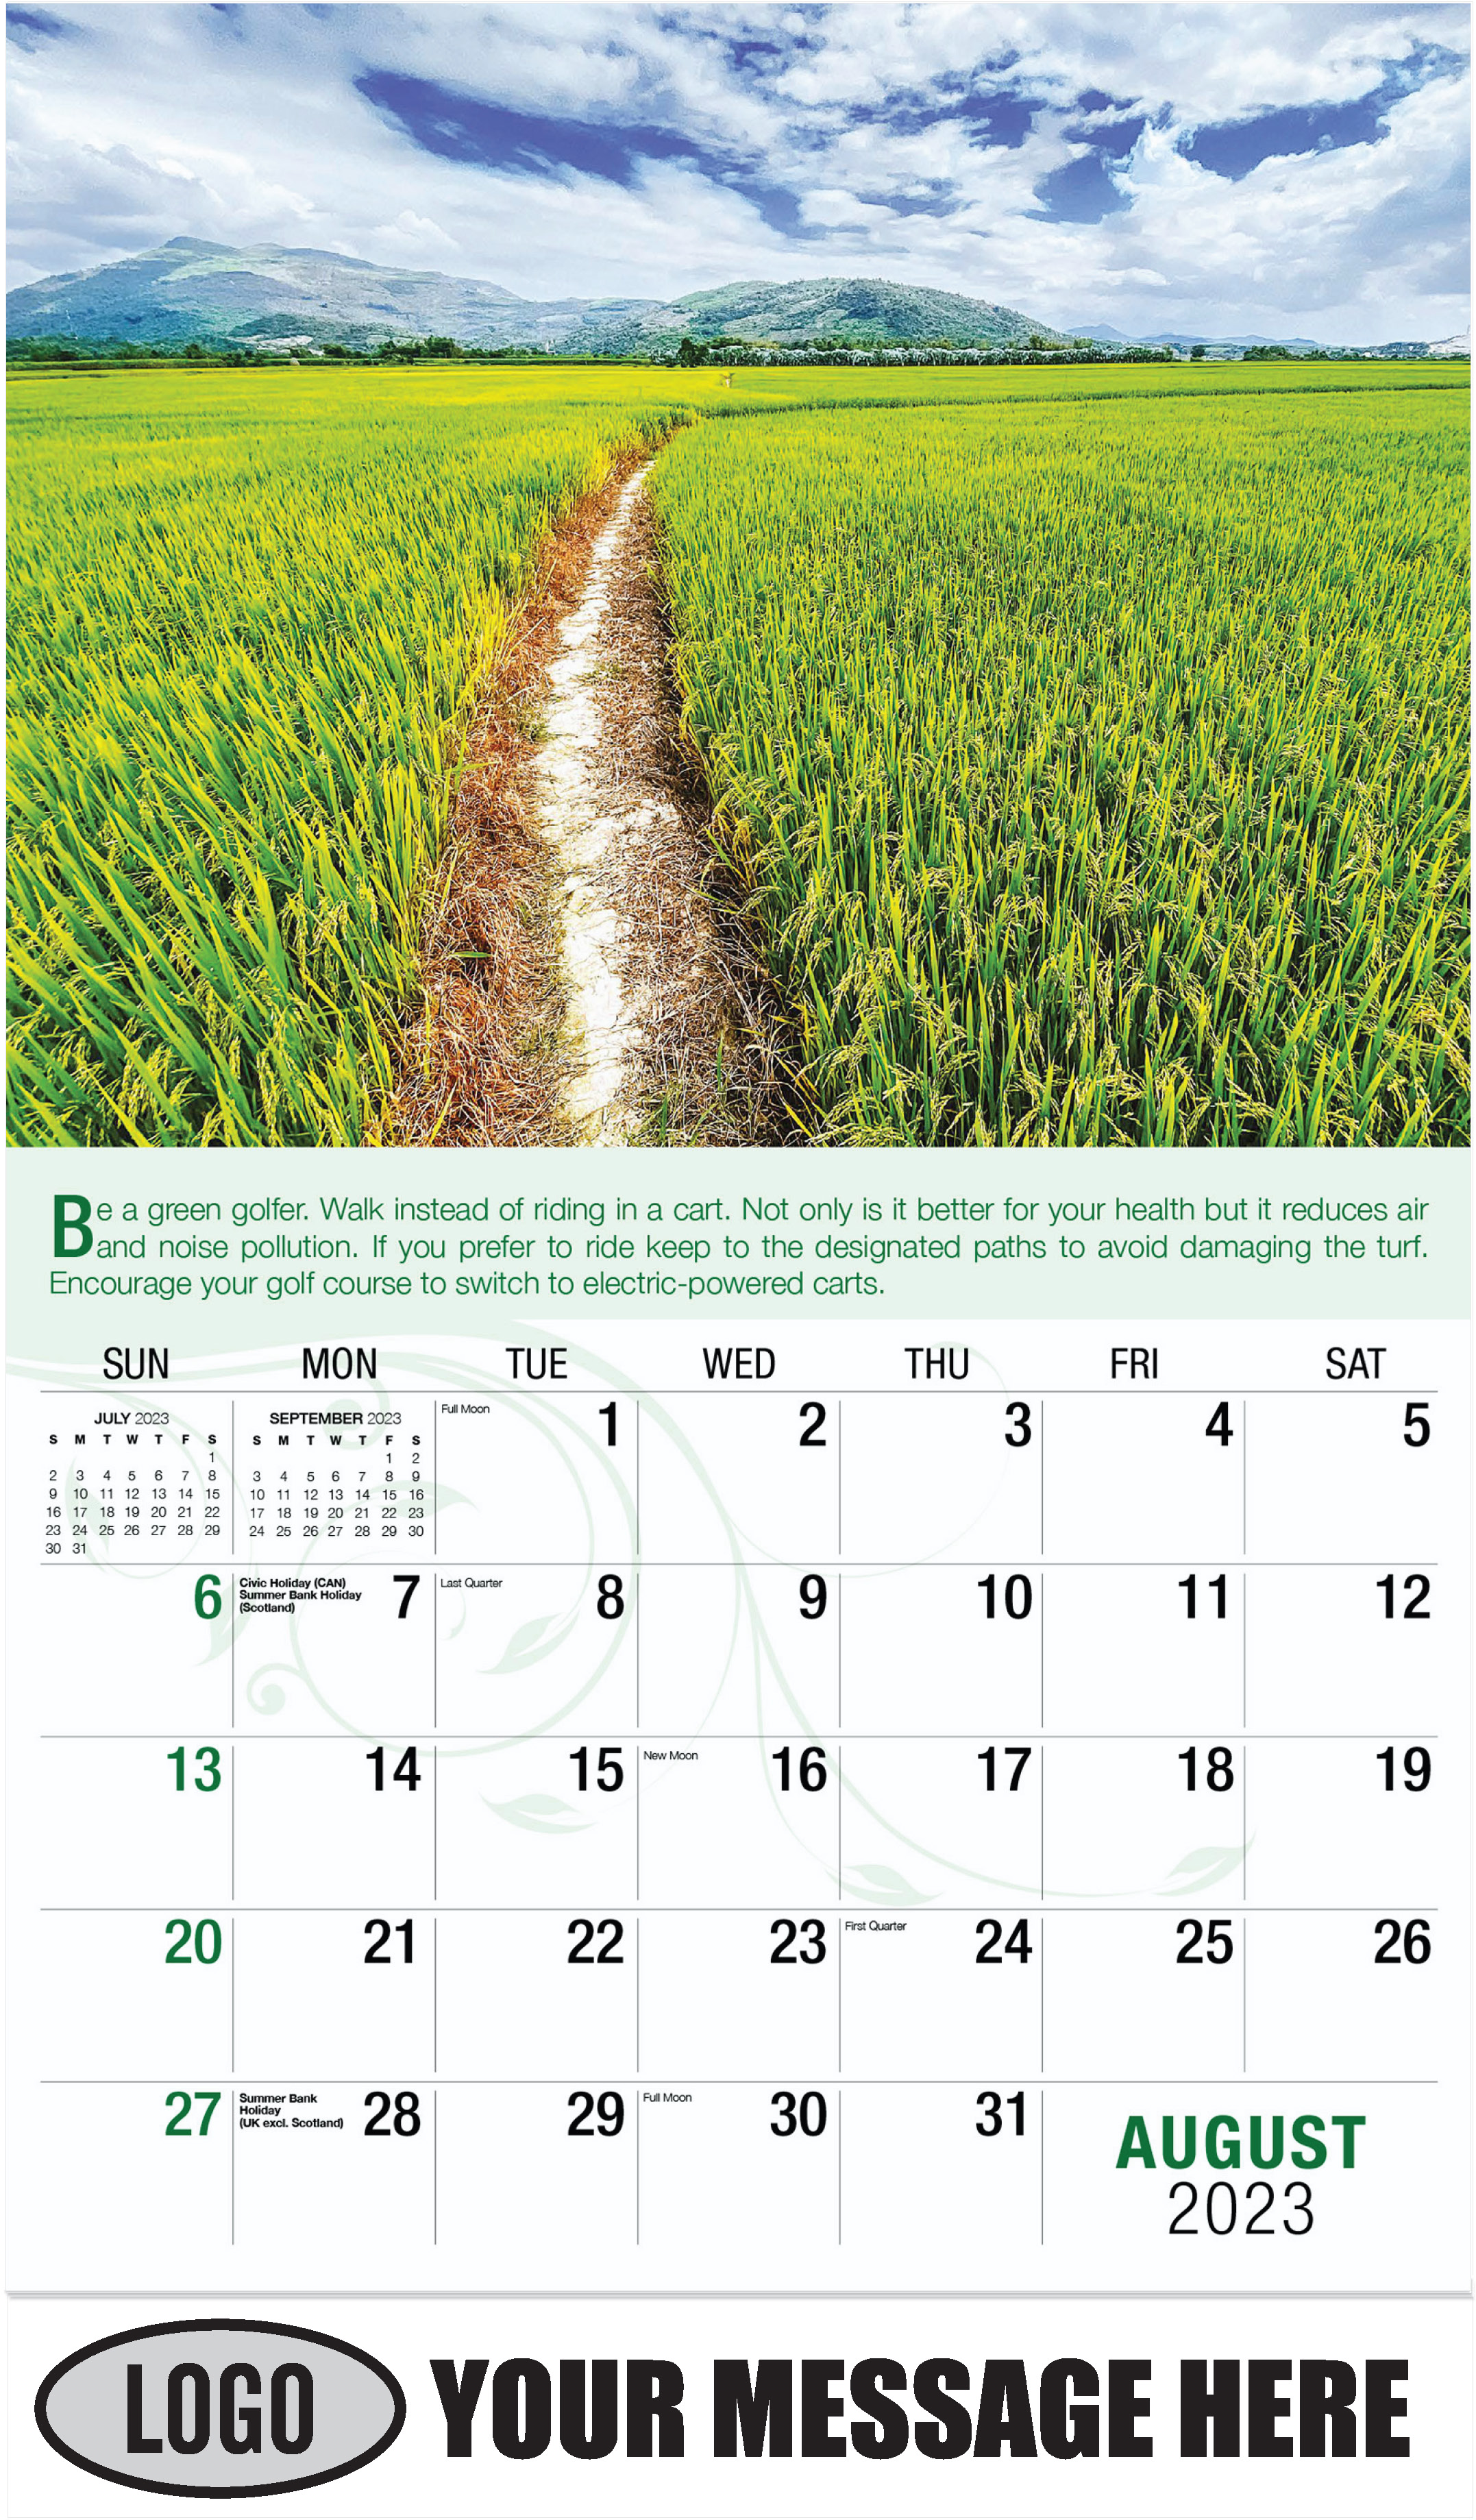 Rice Field - August - Go Green 2023 Promotional Calendar